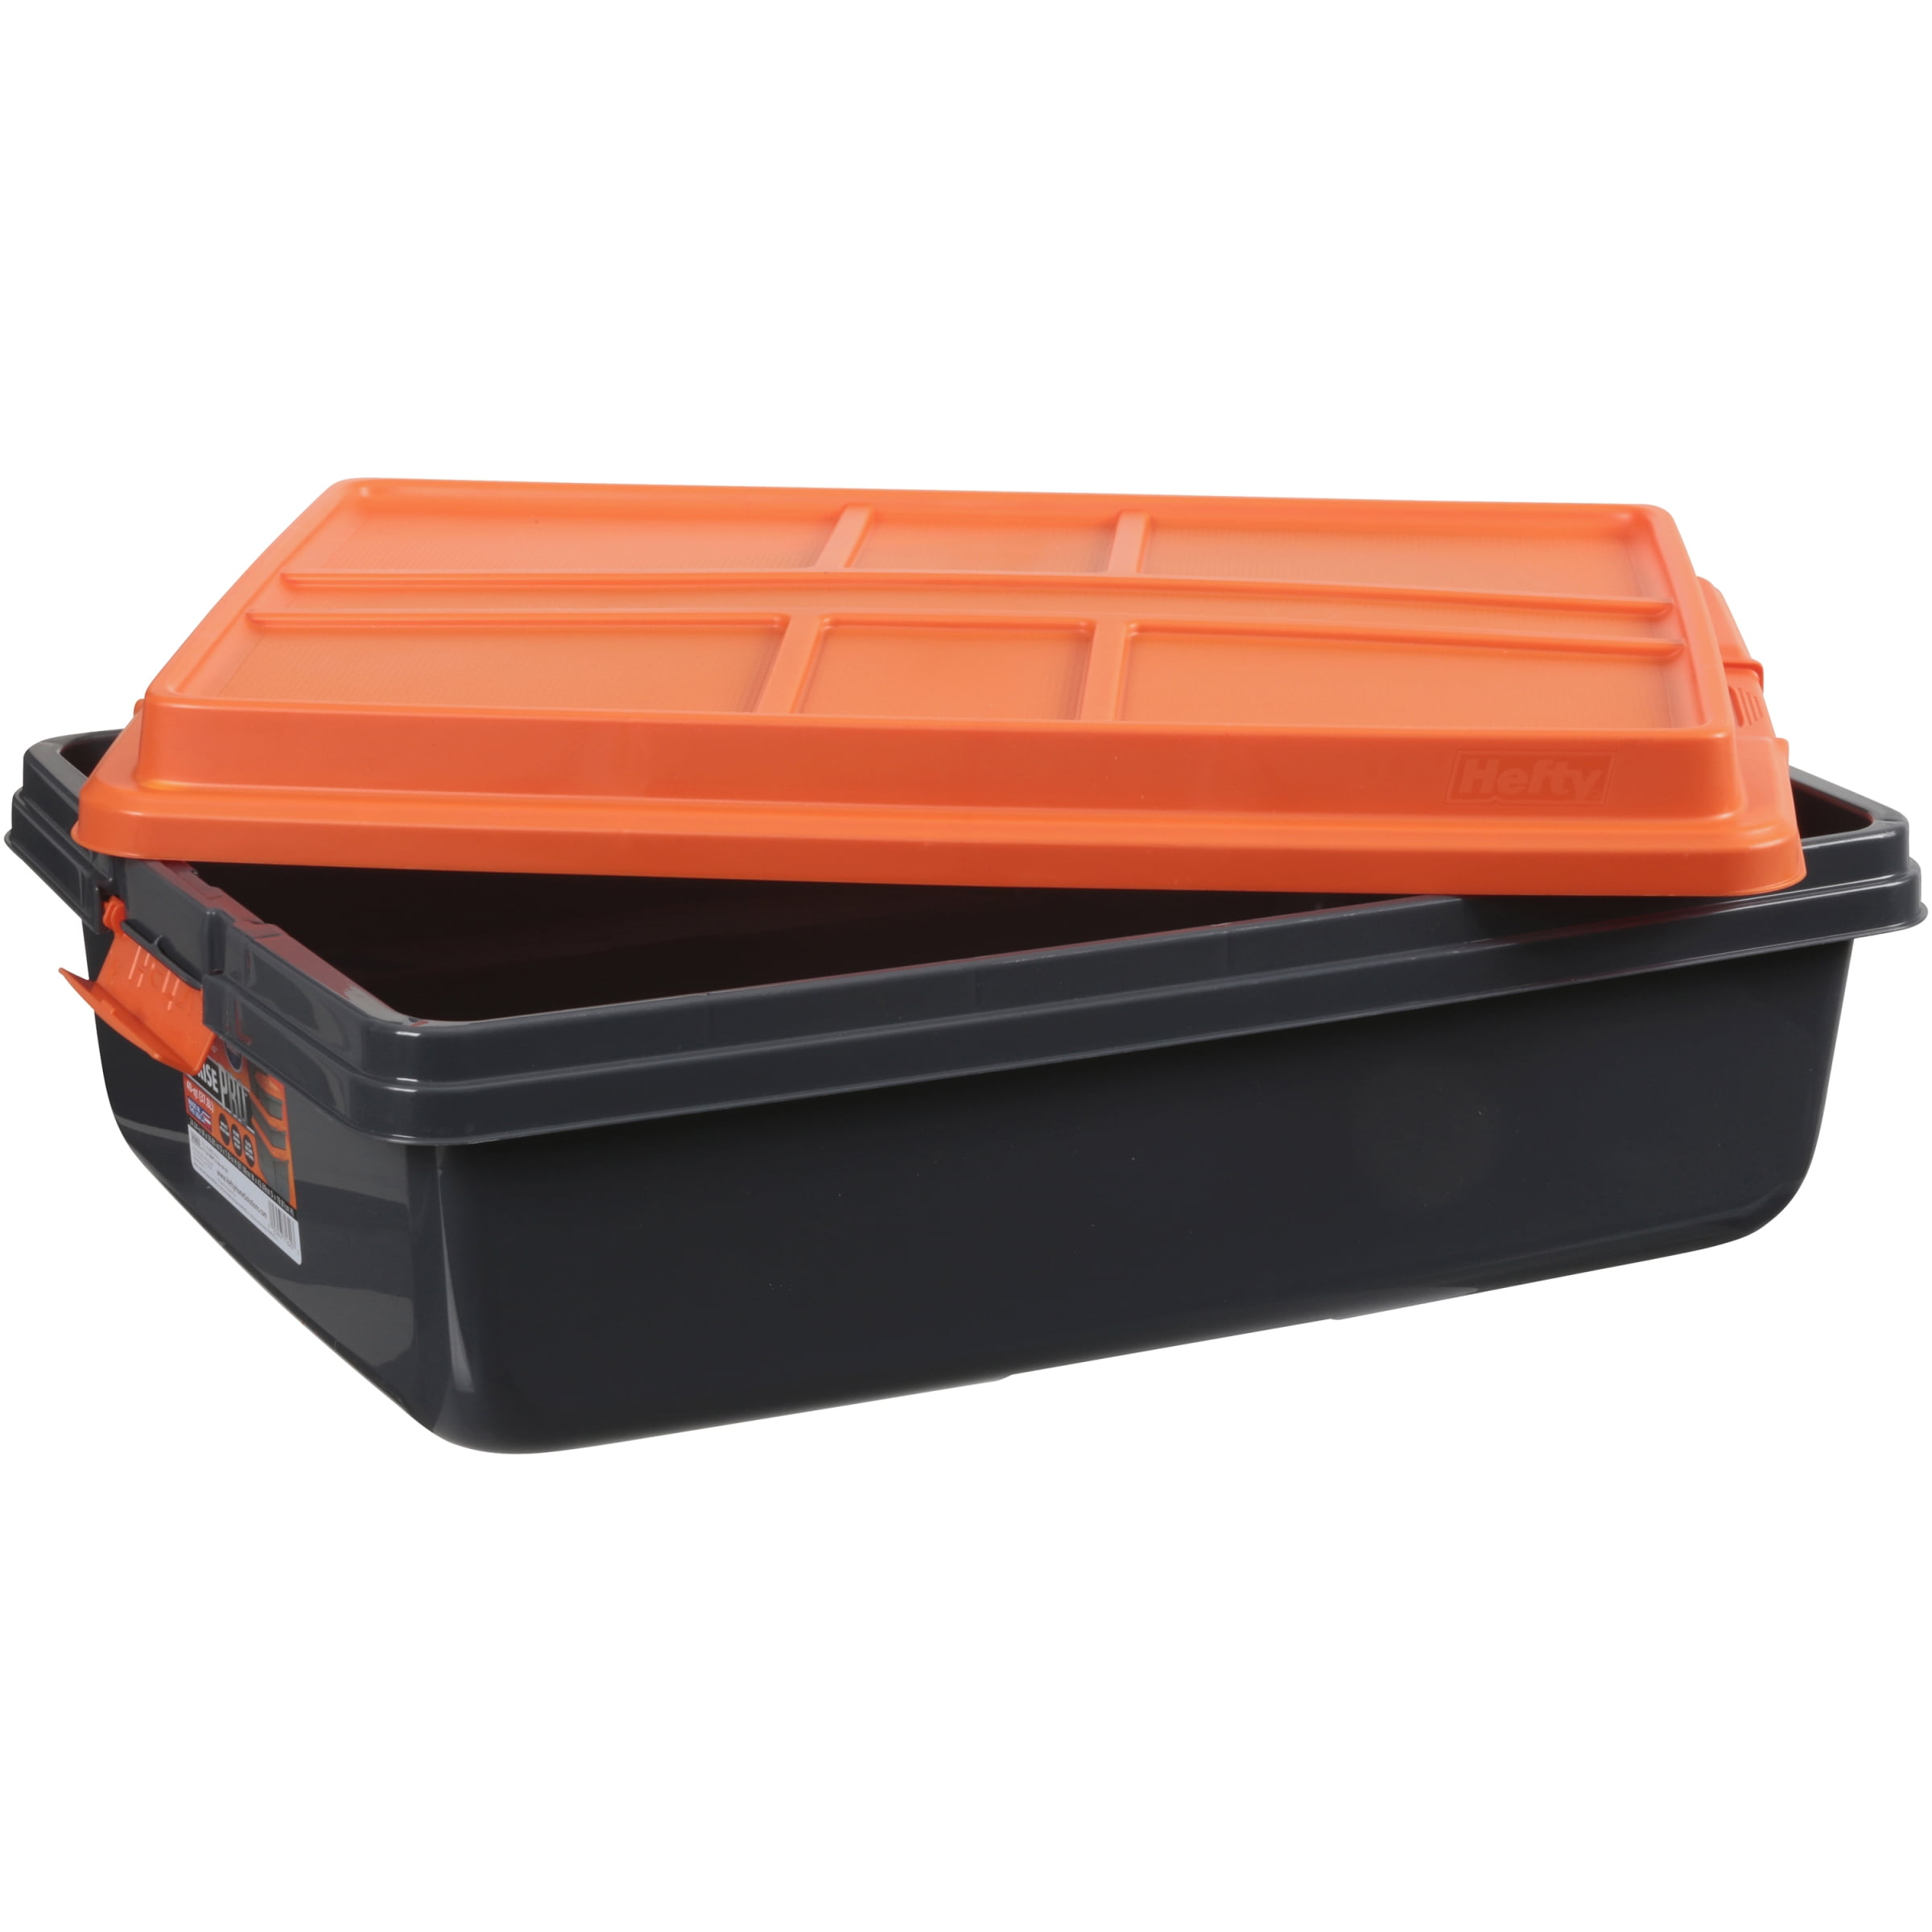 Hefty HI-RISE Heavy Duty 18 Qt. Latch Storage Bins, Orange/Gray